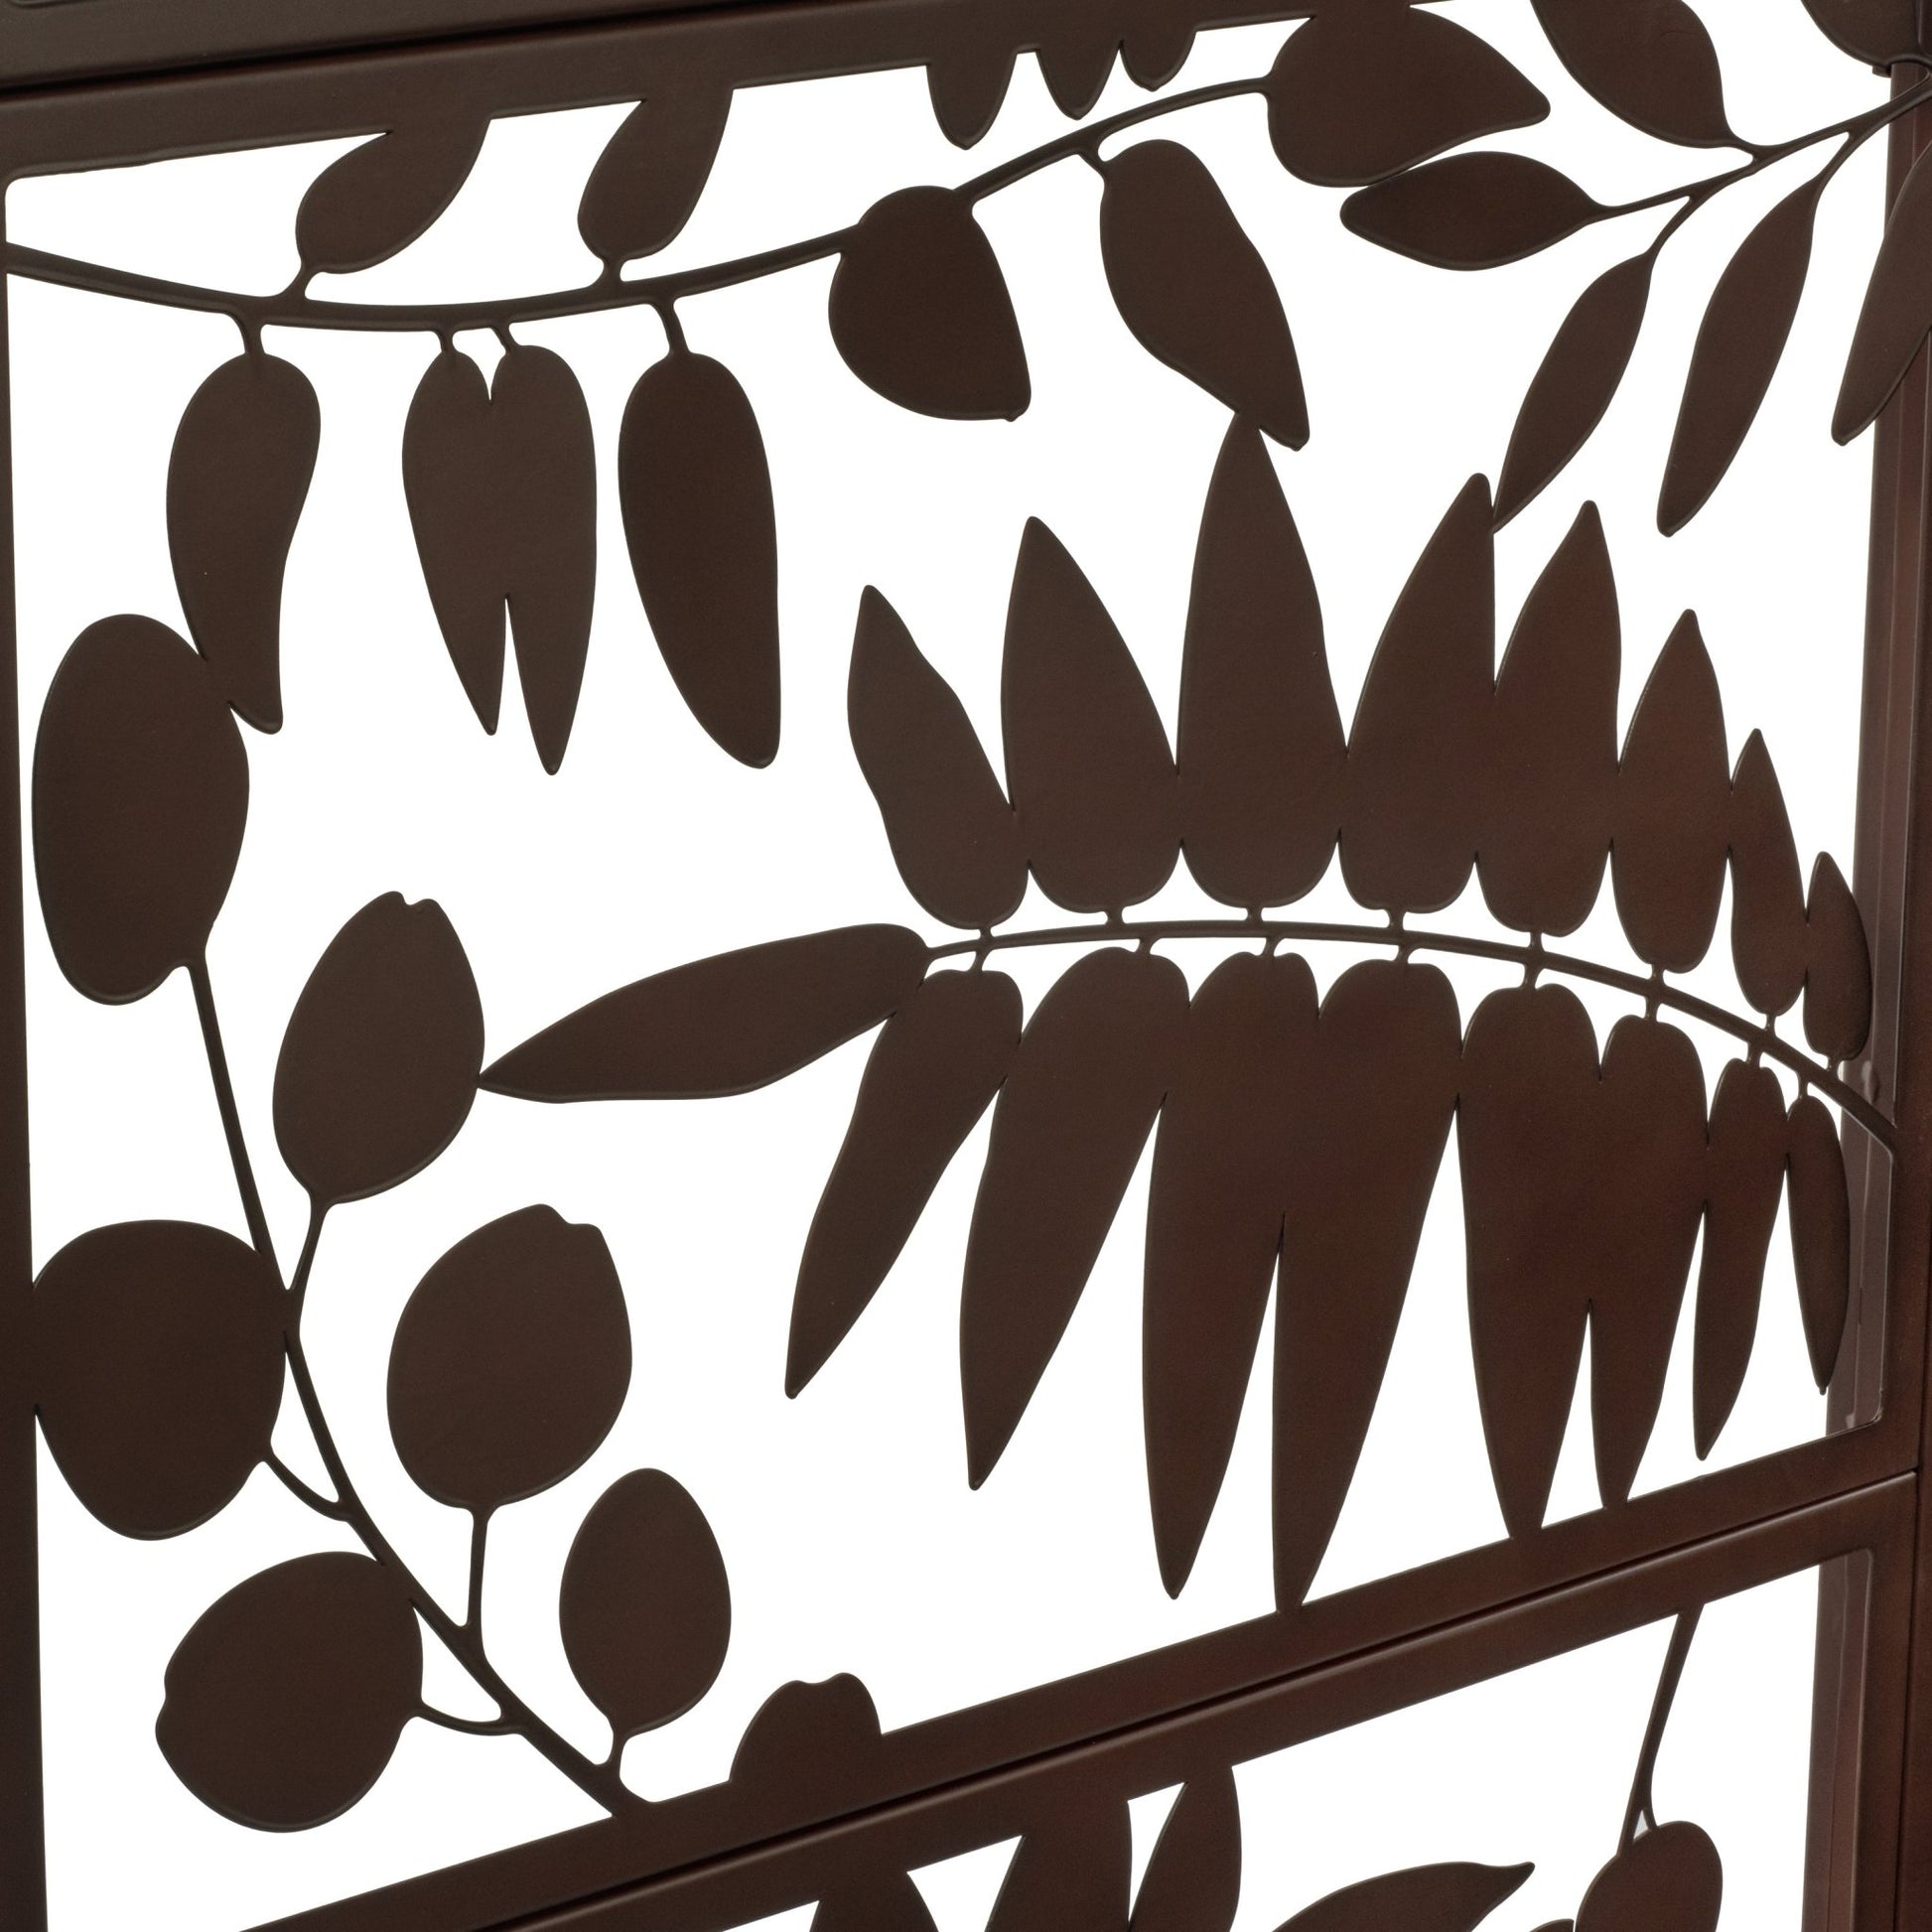 H Potter Garden Trellis Privacy Screen: Climbing Plants, Outdoor Patio, Decorative Metal Panel